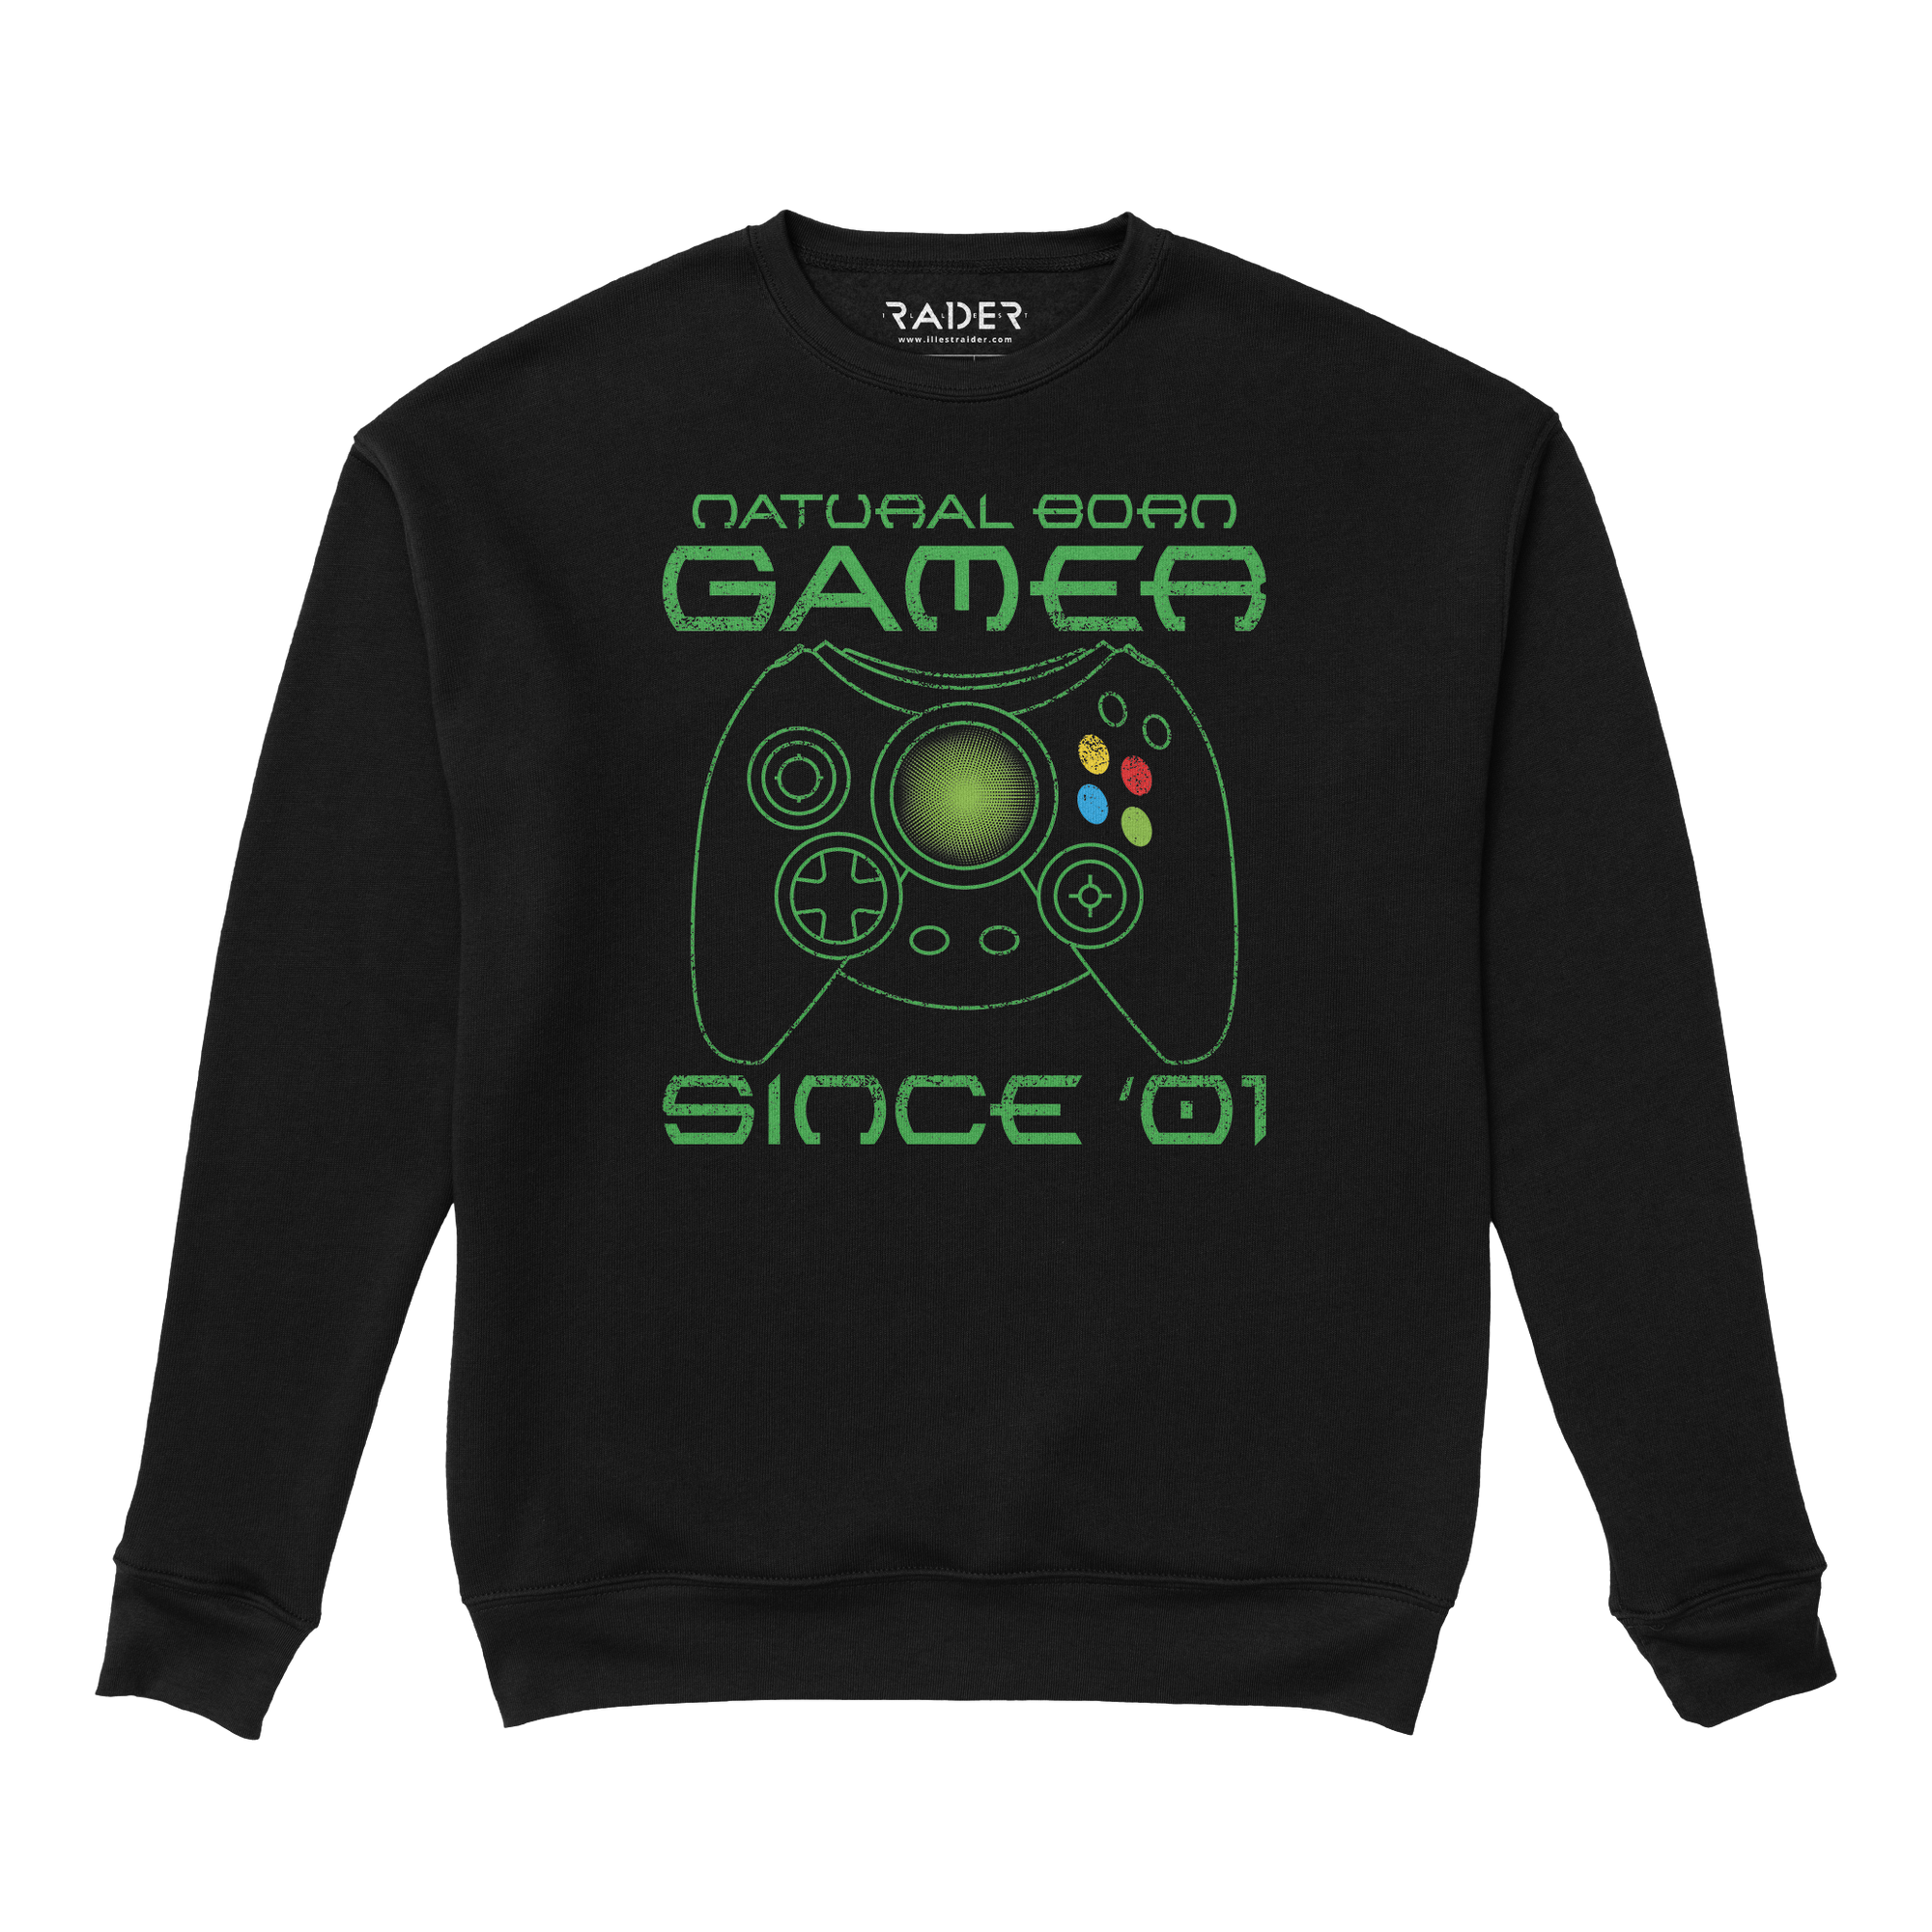 Natural Born Gamer Since &#39;01 V2 Sweatshirt